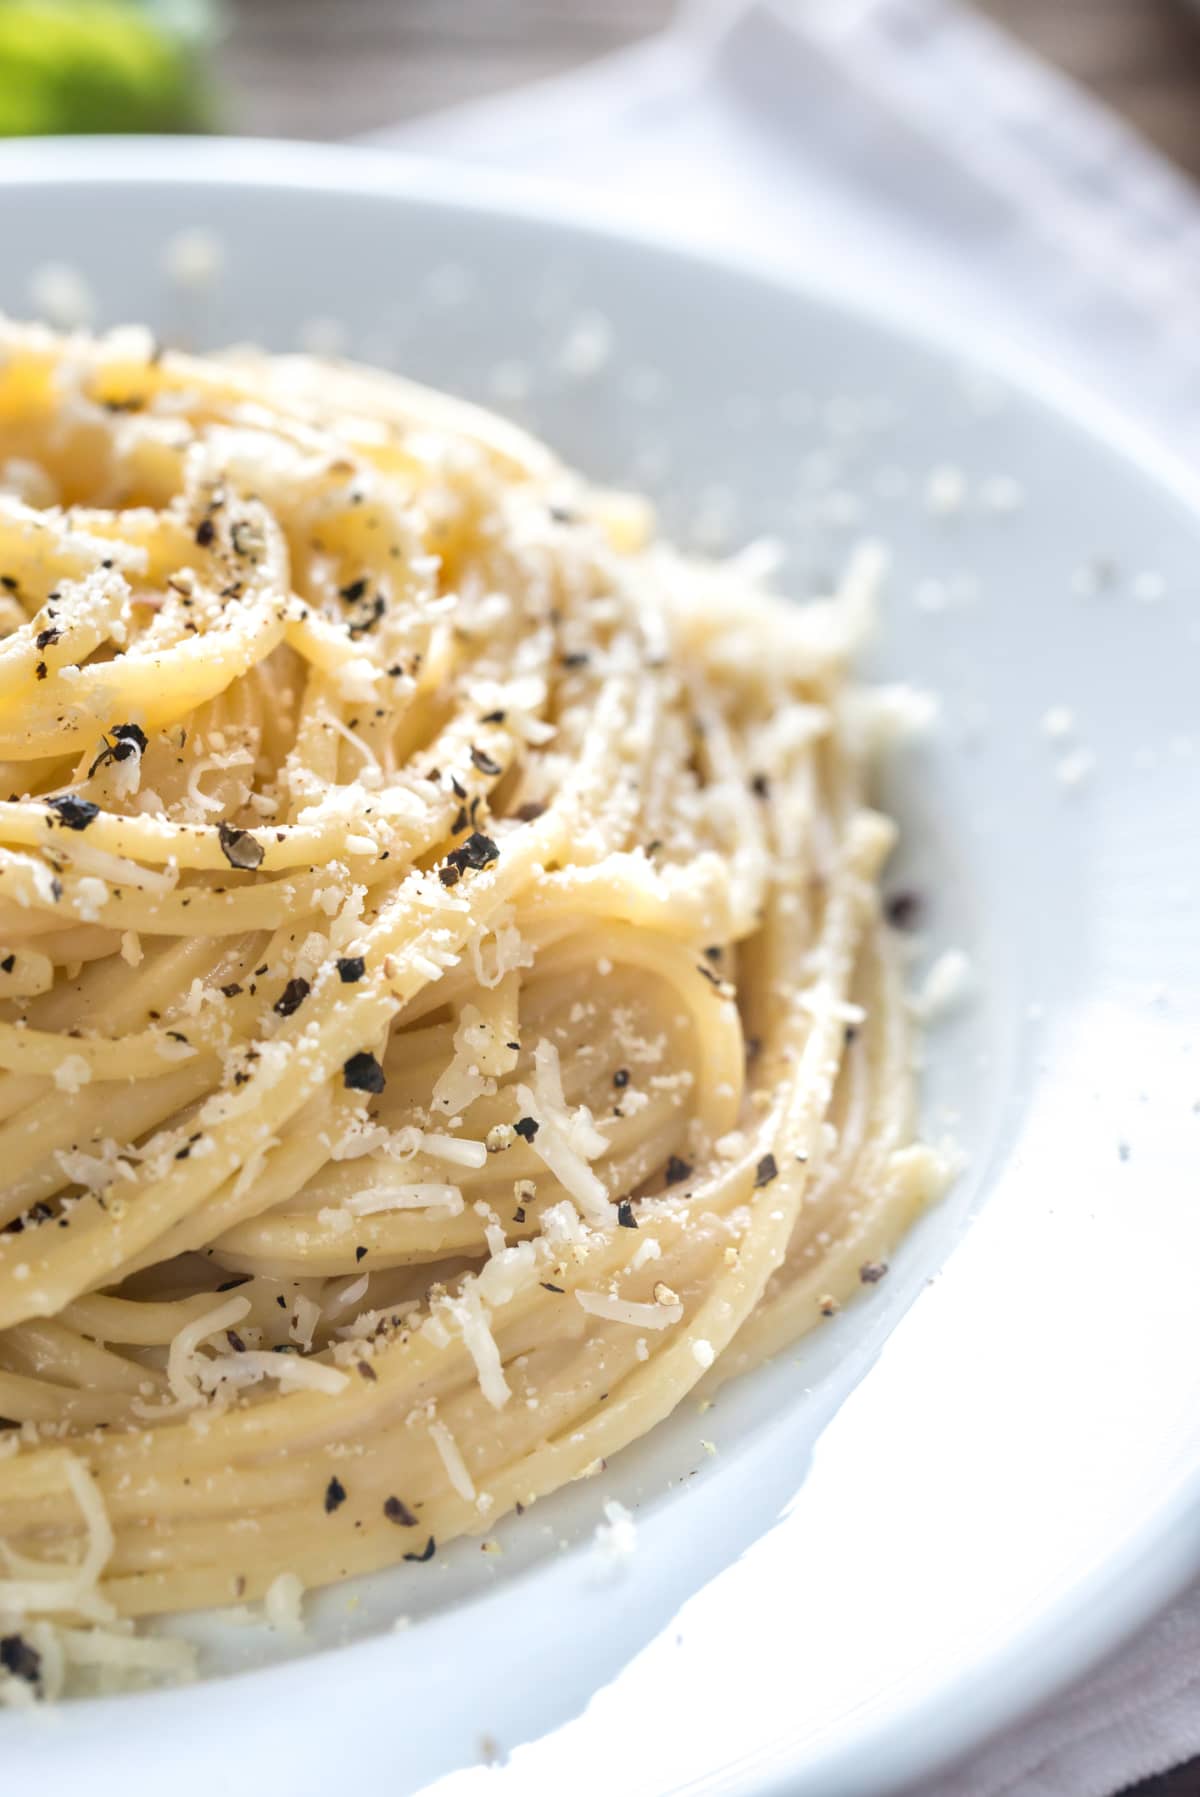 A plate of cacio e pepe pasta, close-up view, uniform background.  Famous dish of Roman cuisine.